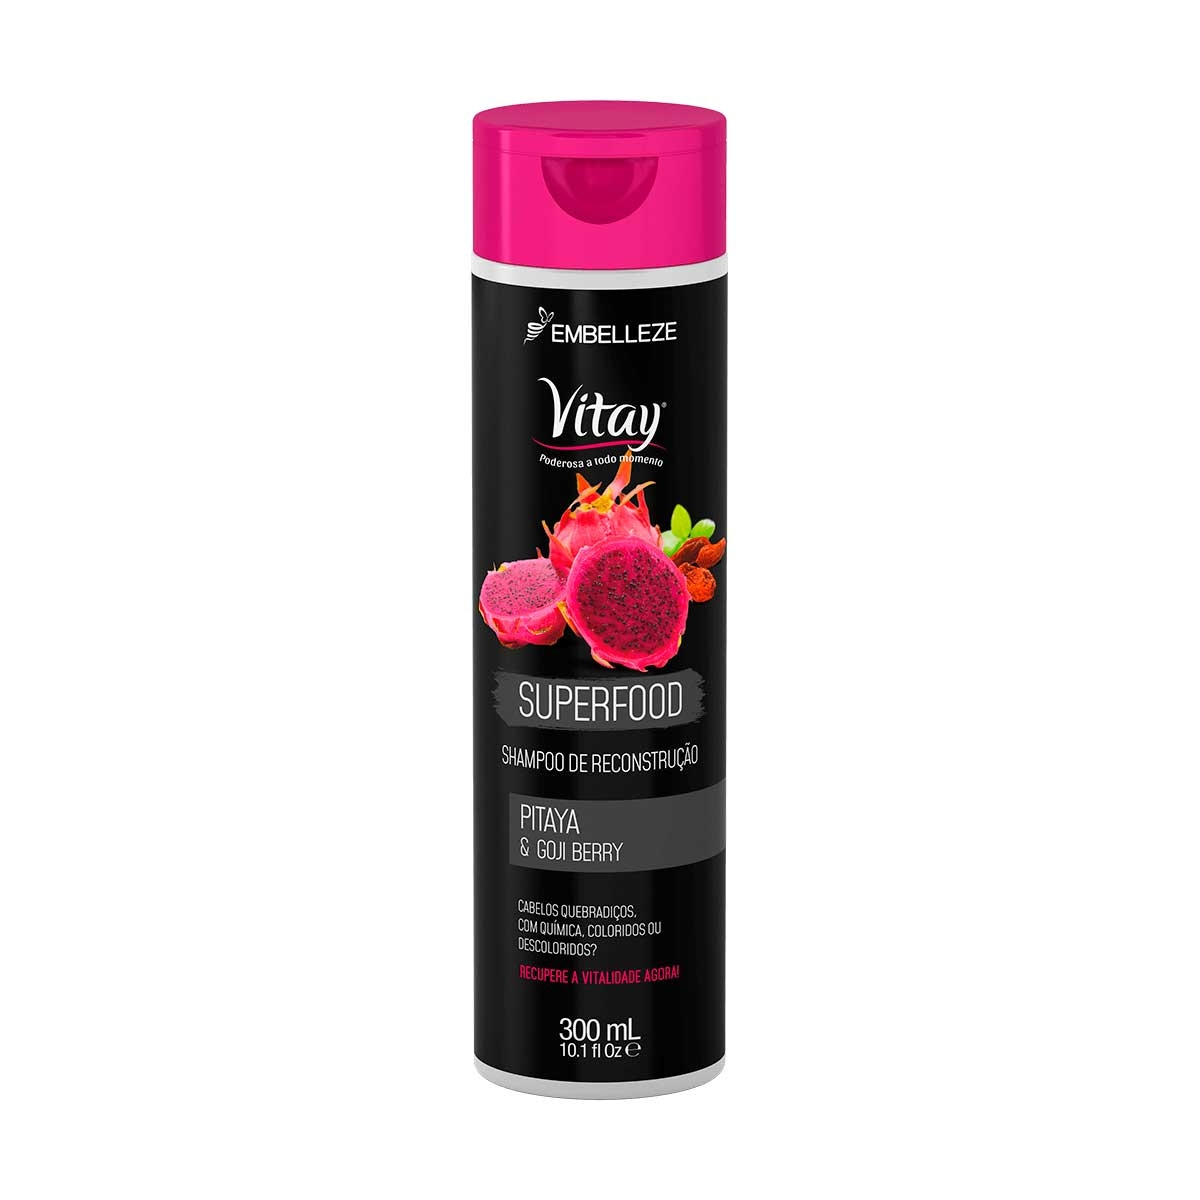 Shampoo Vitay Superfood Pitaya & Gojiberry com 300ml 300ml